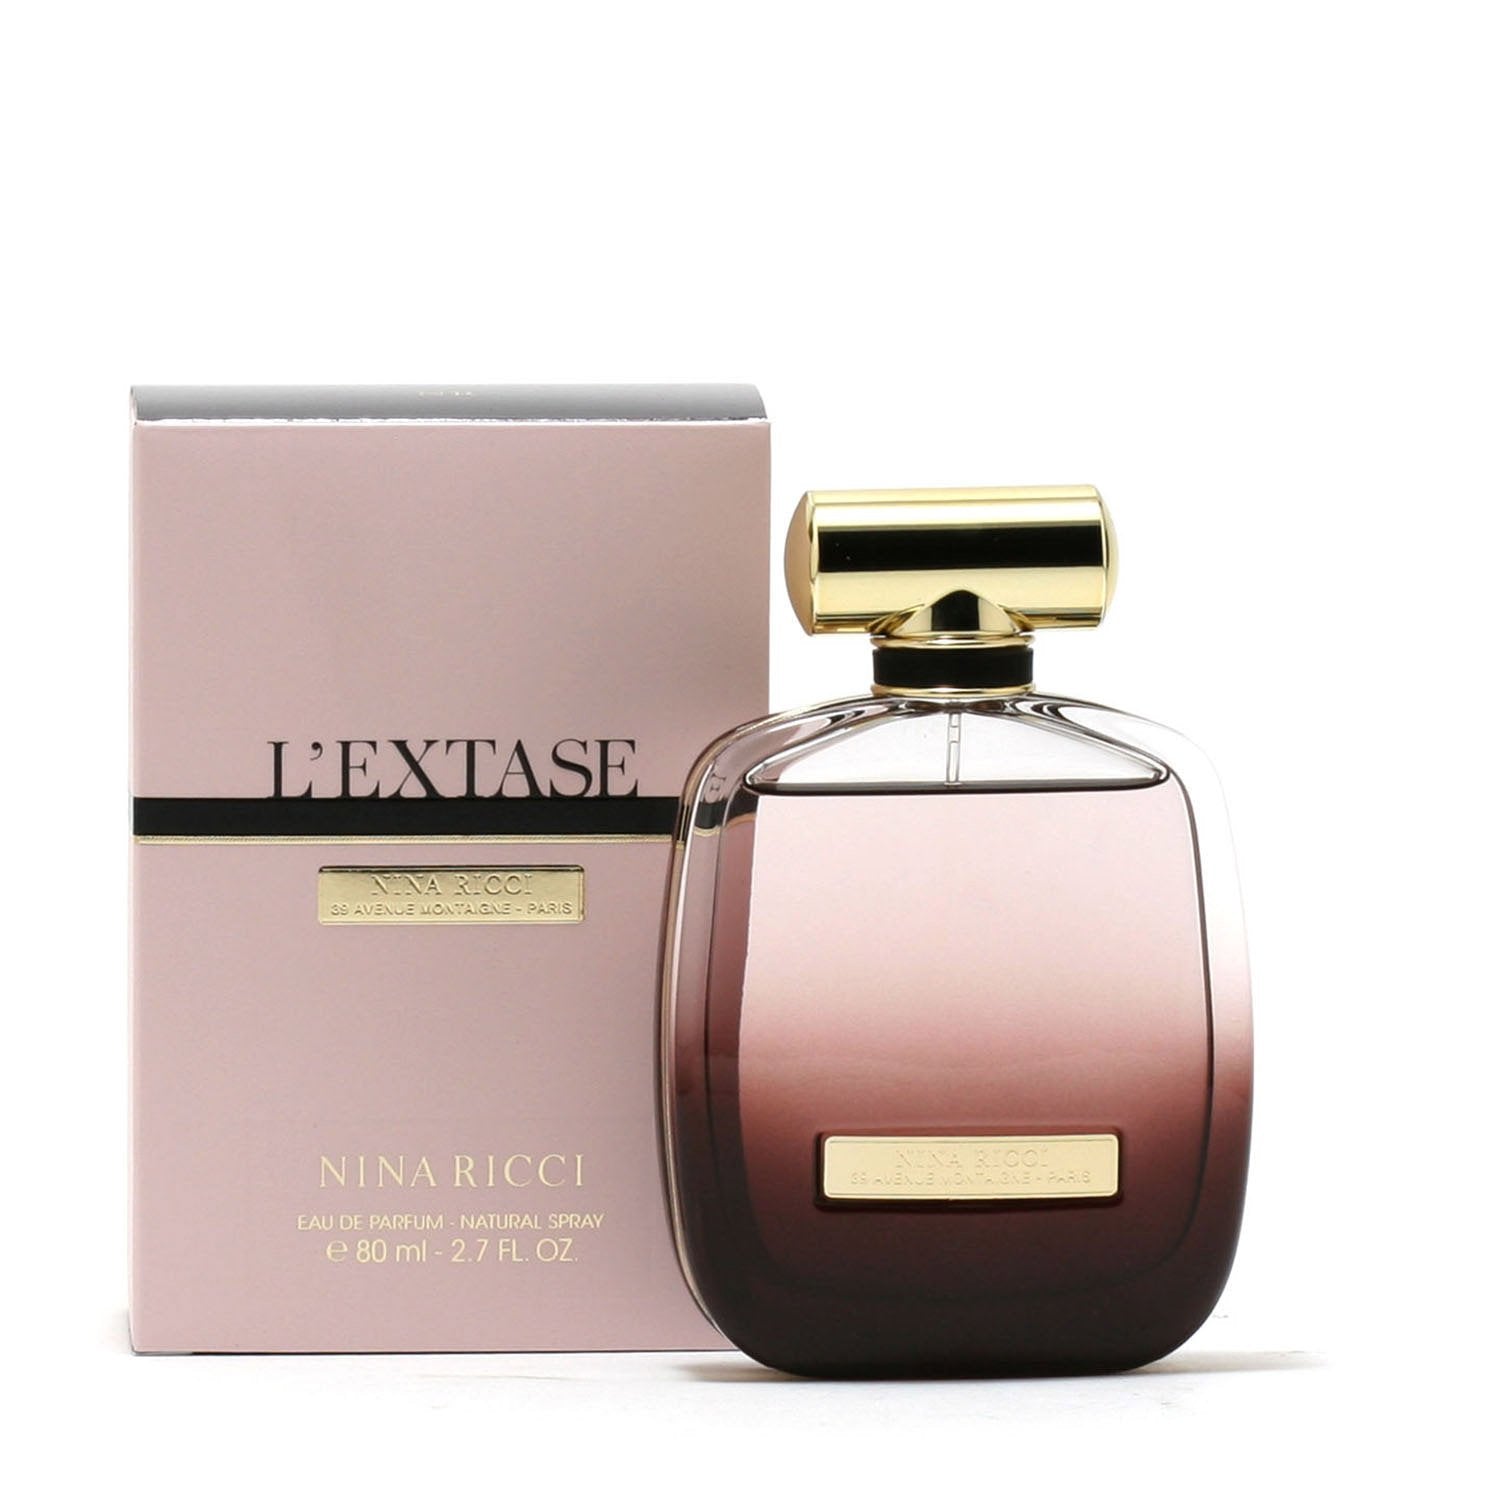 Perfume - NINA RICCI L'EXTASE FOR WOMEN - EAU DE PARFUM SPRAY, 2.7 OZ